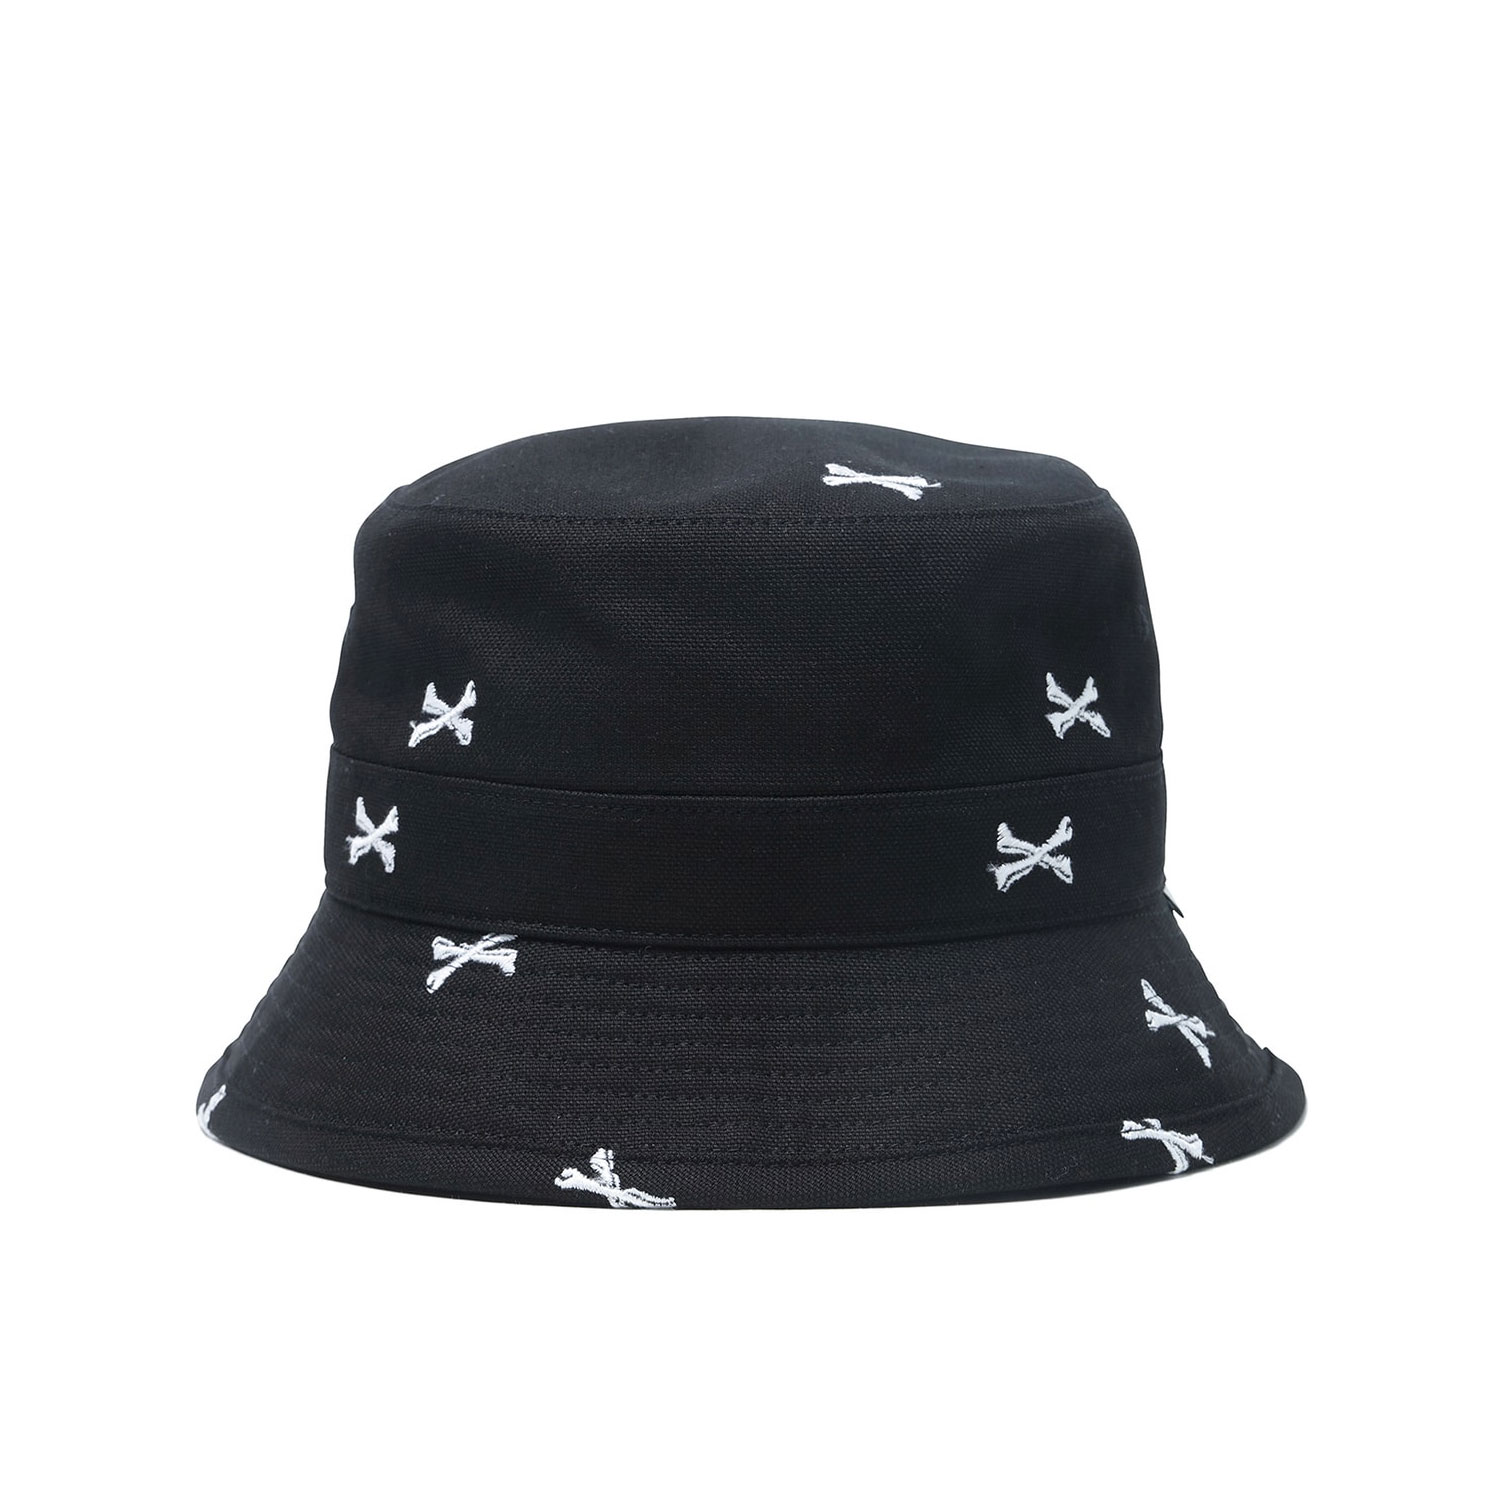 Wtaps Crossbones Bucket 02 Hat | FIRMAMENT - Berlin Renaissance